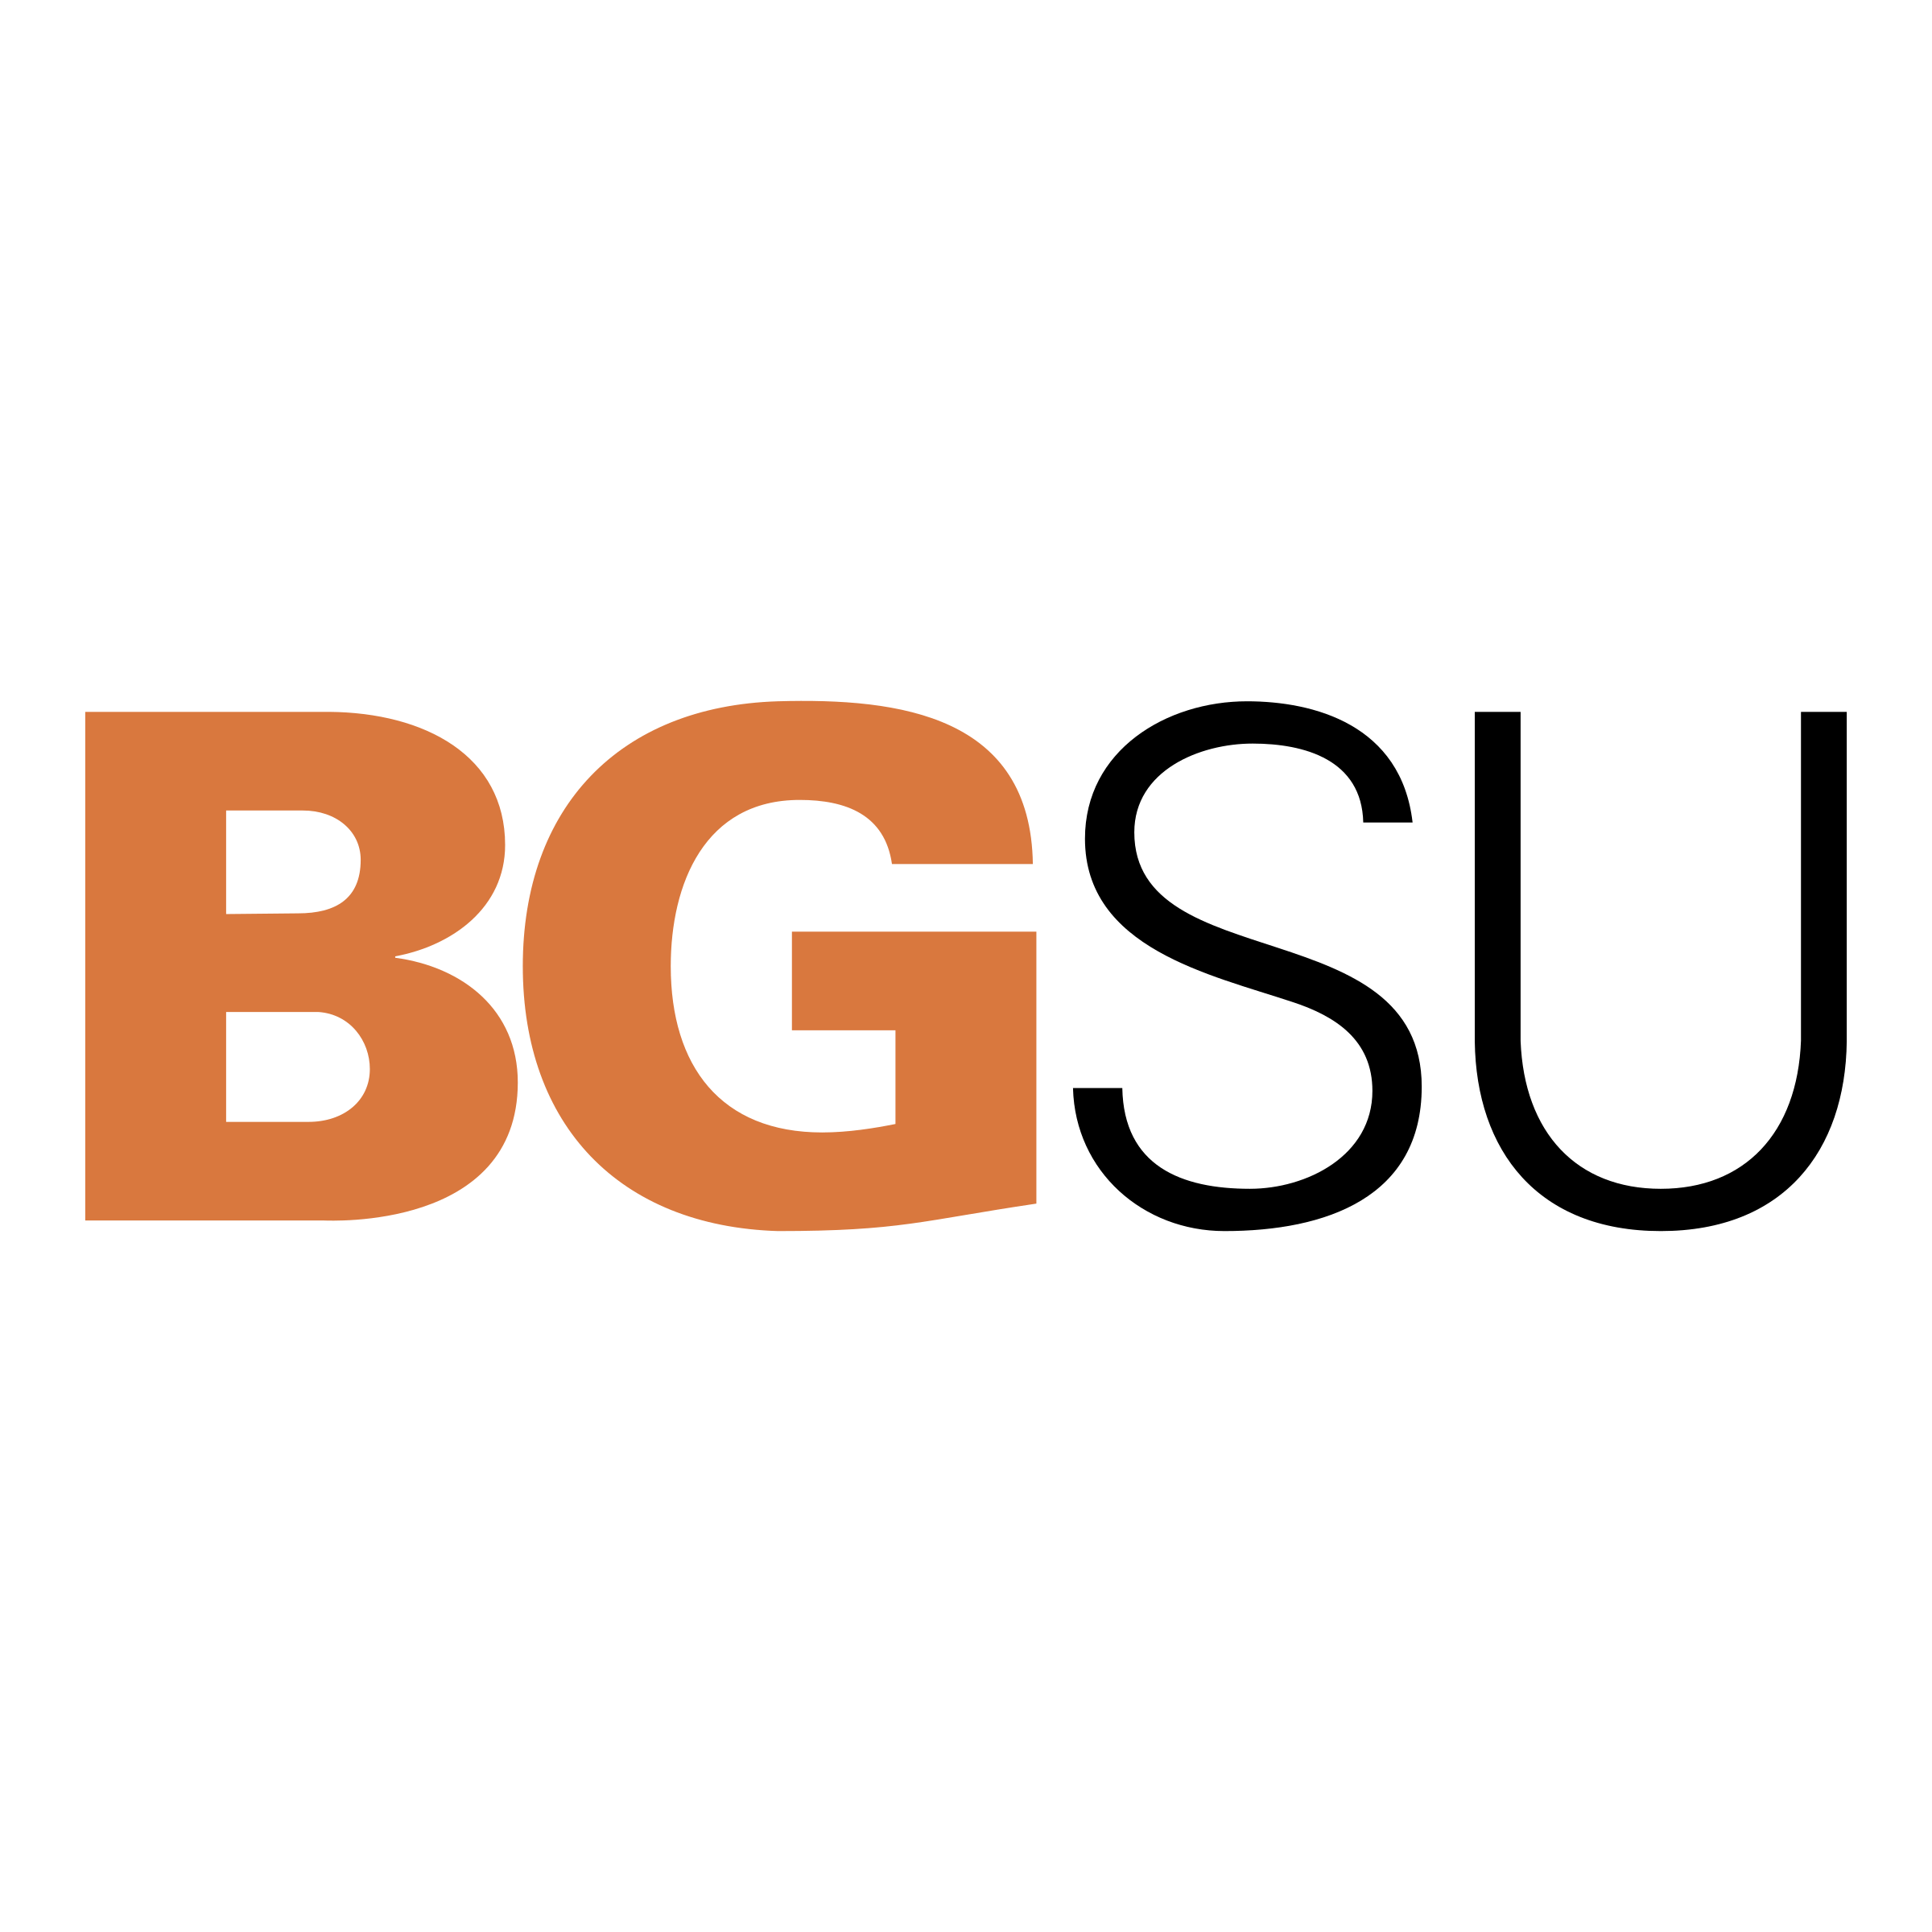 Bowling Green Logo - Bowling Green State University 01 Logo PNG Transparent & SVG Vector ...